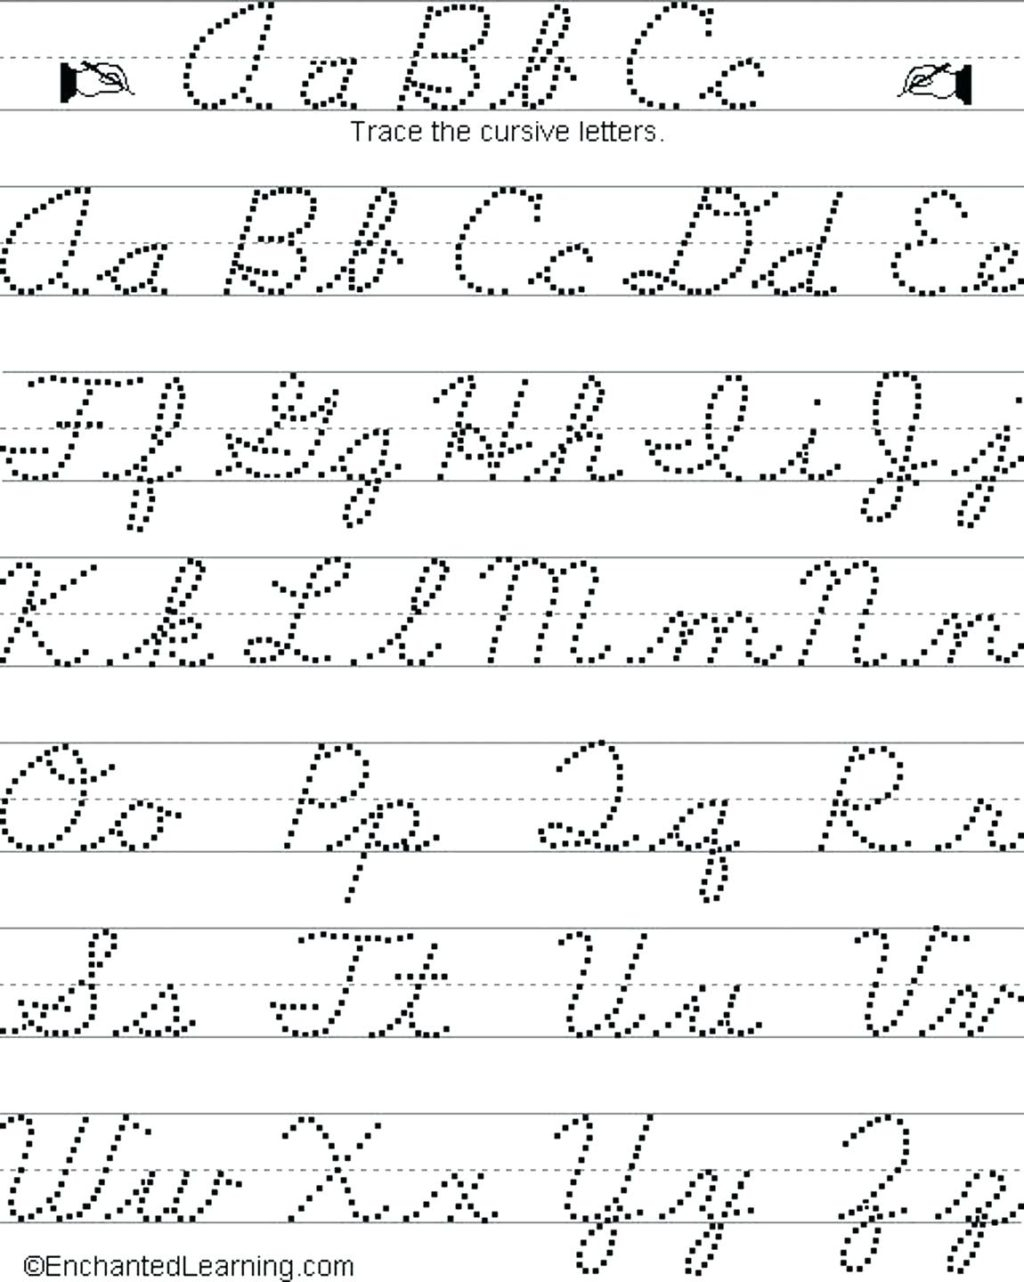 Tracing Cursive Letters Worksheets Free | AlphabetWorksheetsFree.com